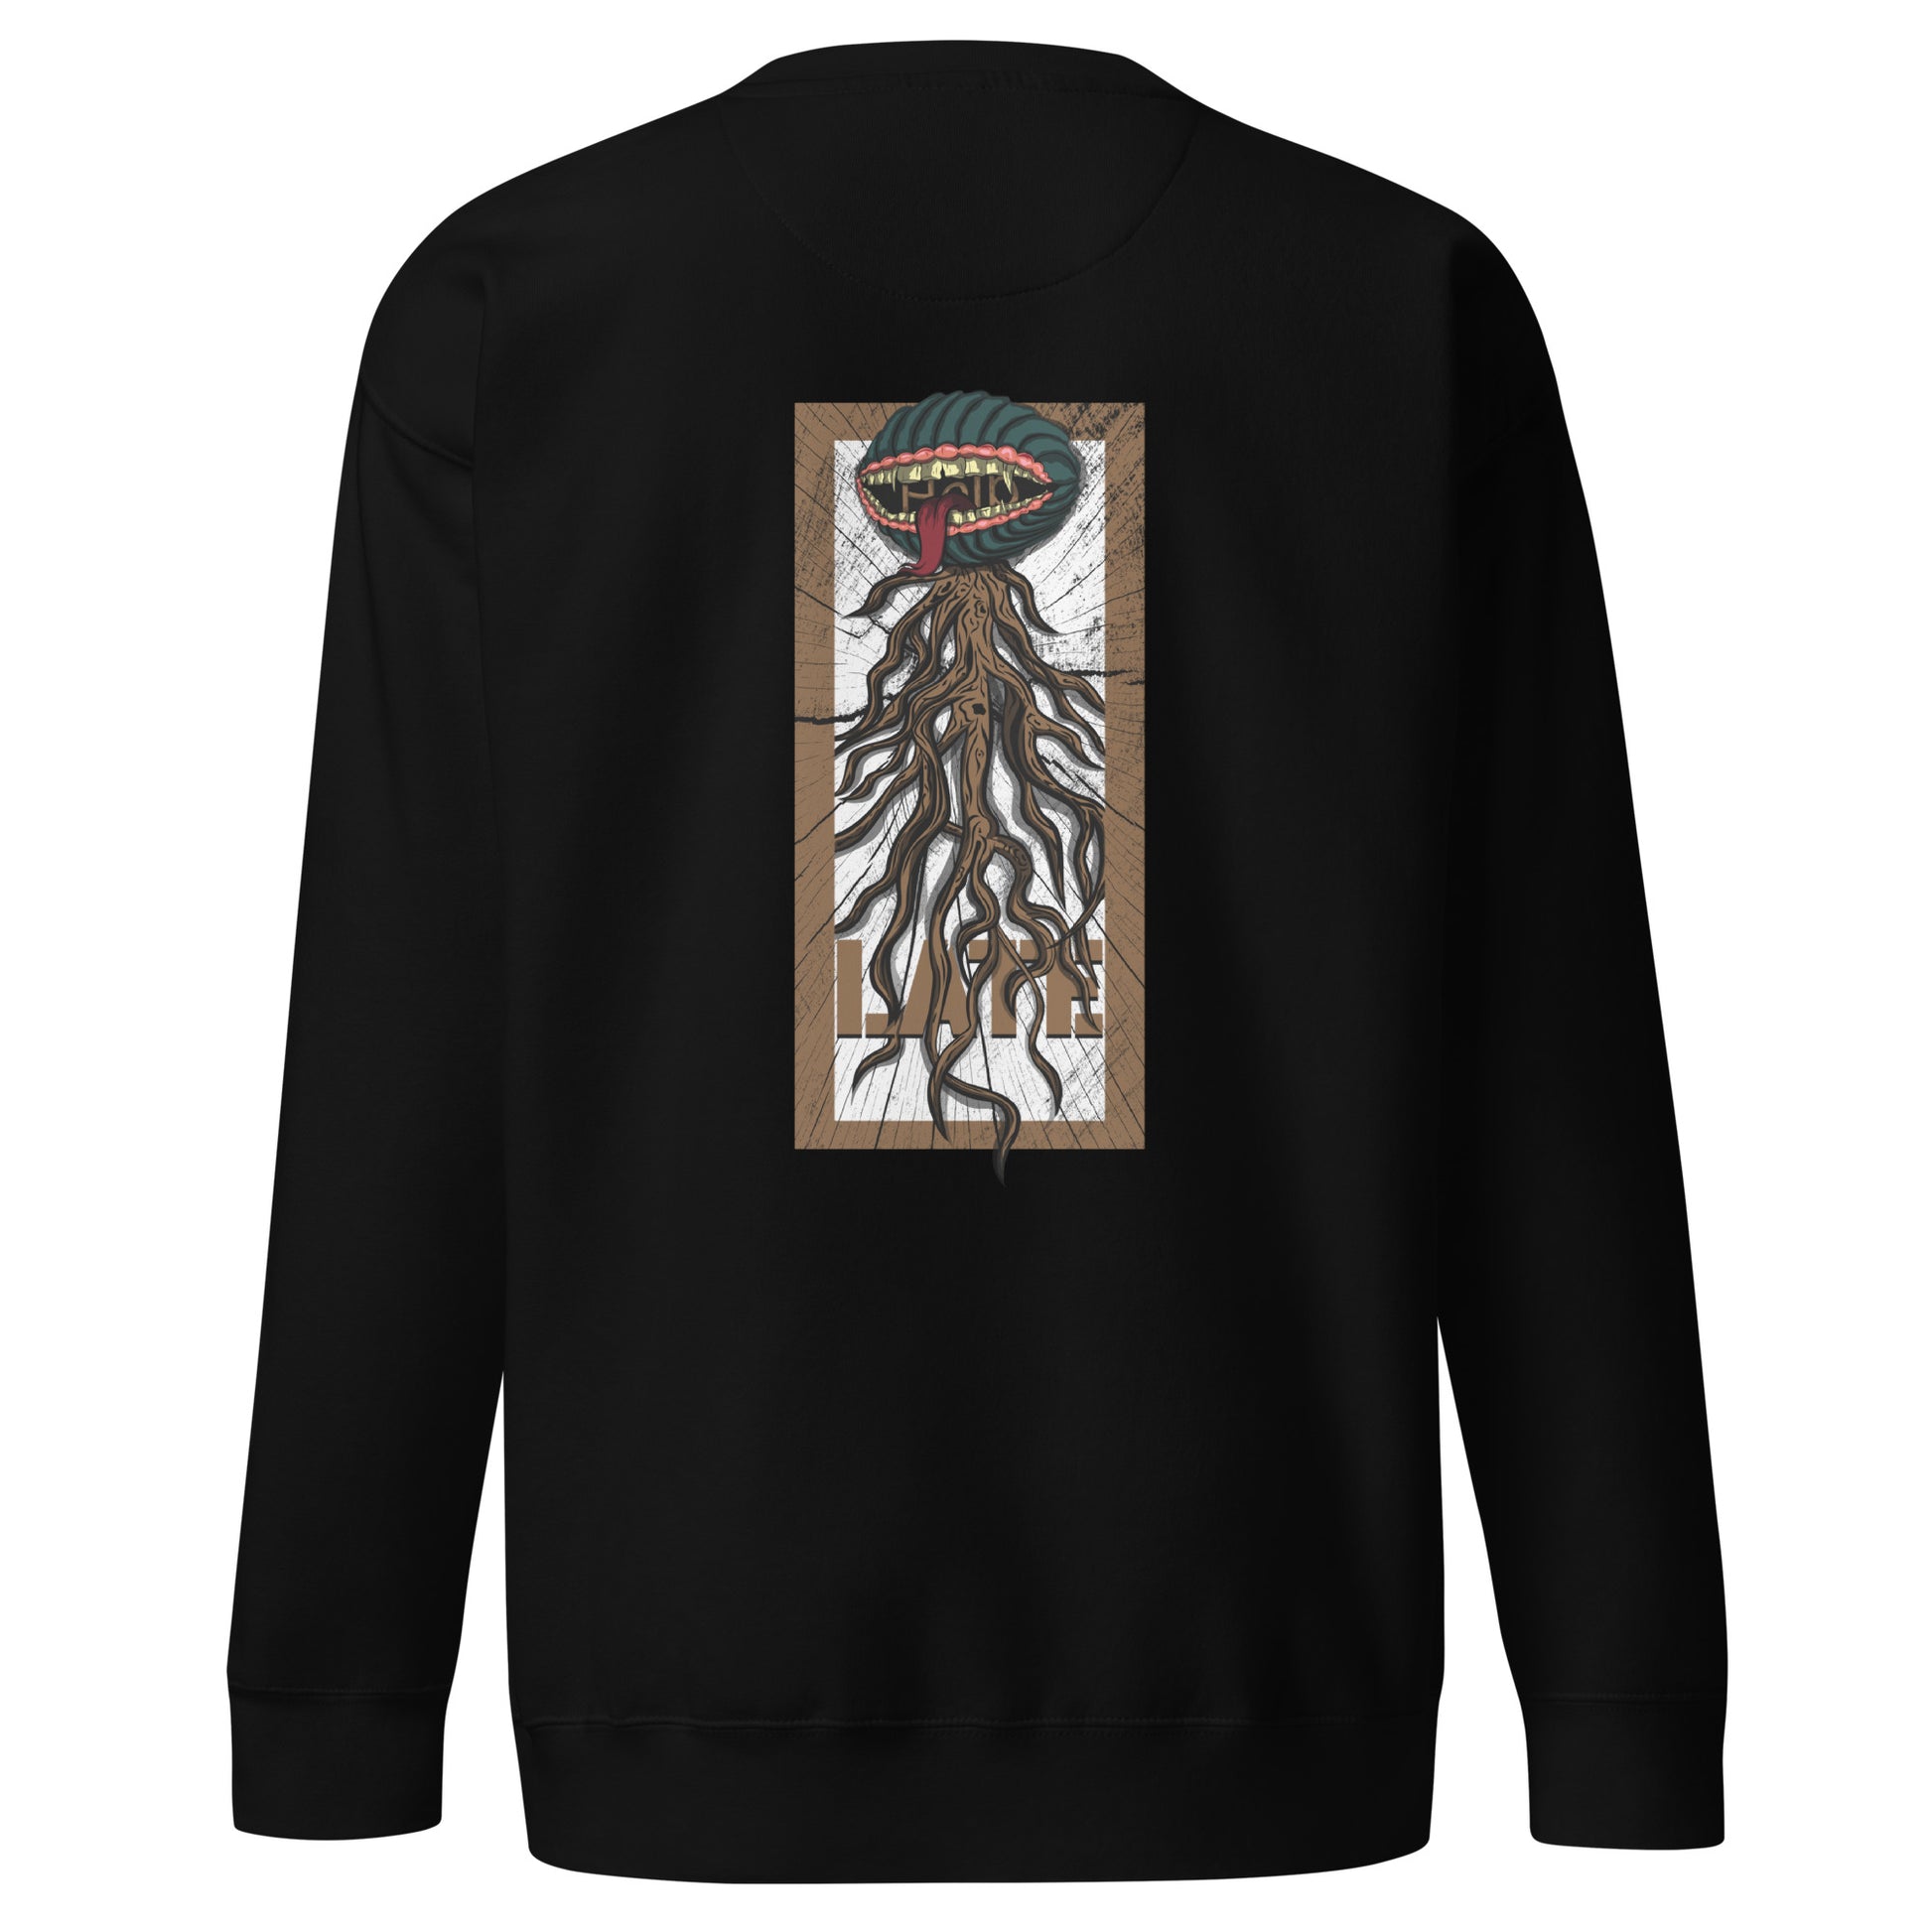 Sweatshirt Hungry plante carnivore style santacruz skateboarding, fond style bois old school skate, sweat unisex dos couleur noir